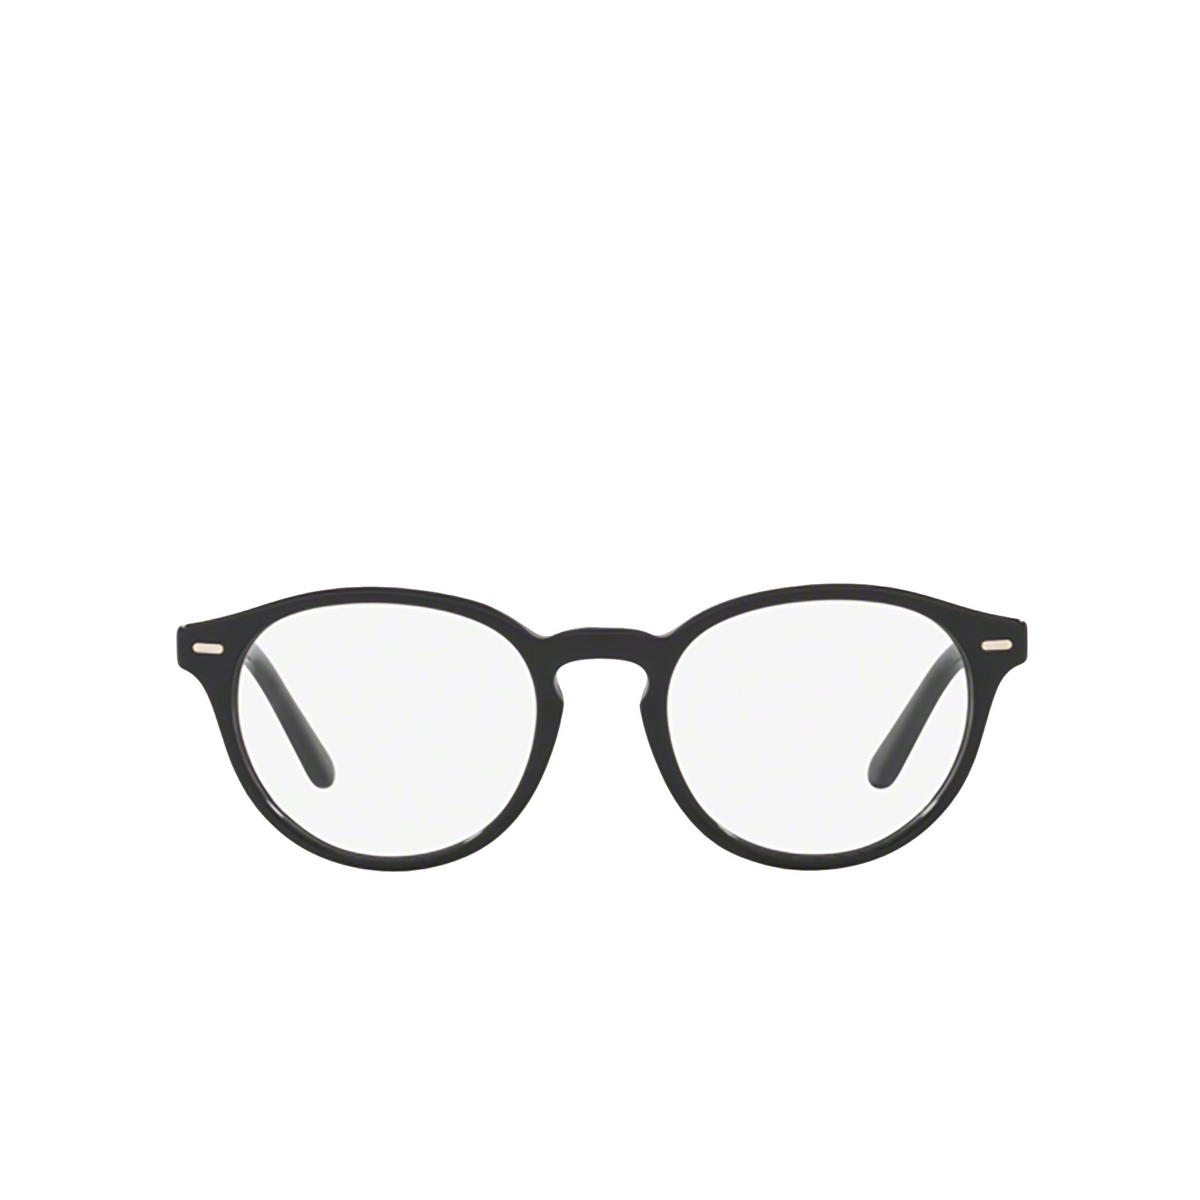 Polo Ralph Lauren® Round Eyeglasses: PH2208 color Shiny Black 5001 - front view.